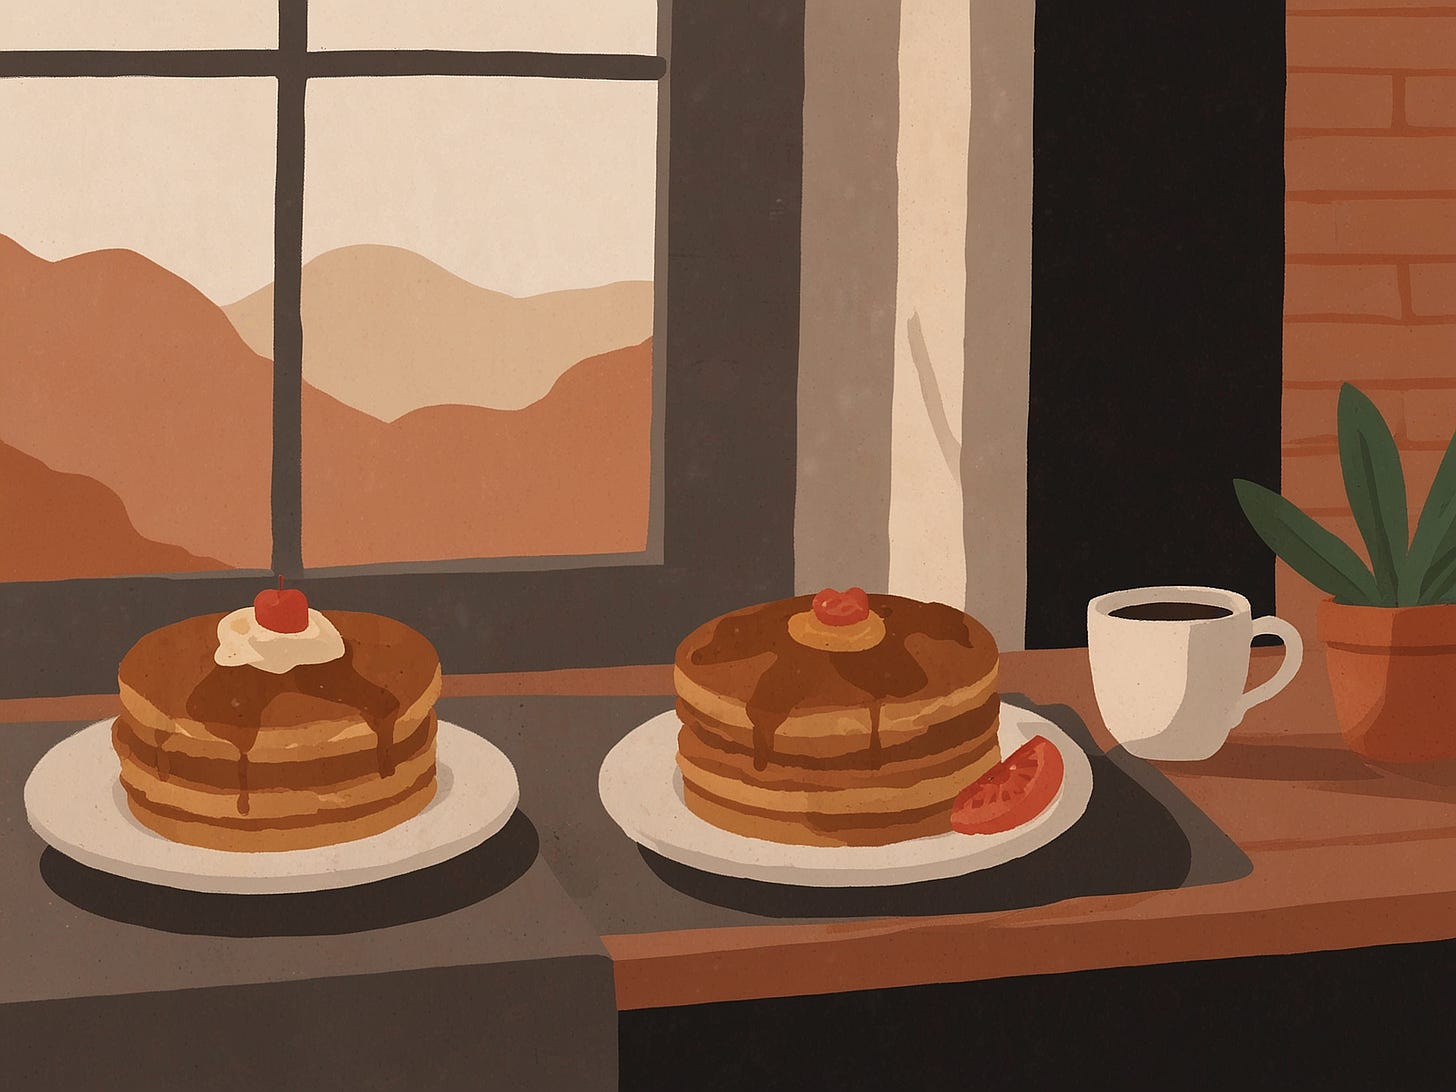 morning coffee and pancakes illustration, beside window, natural sunlight, minimalist, shadow